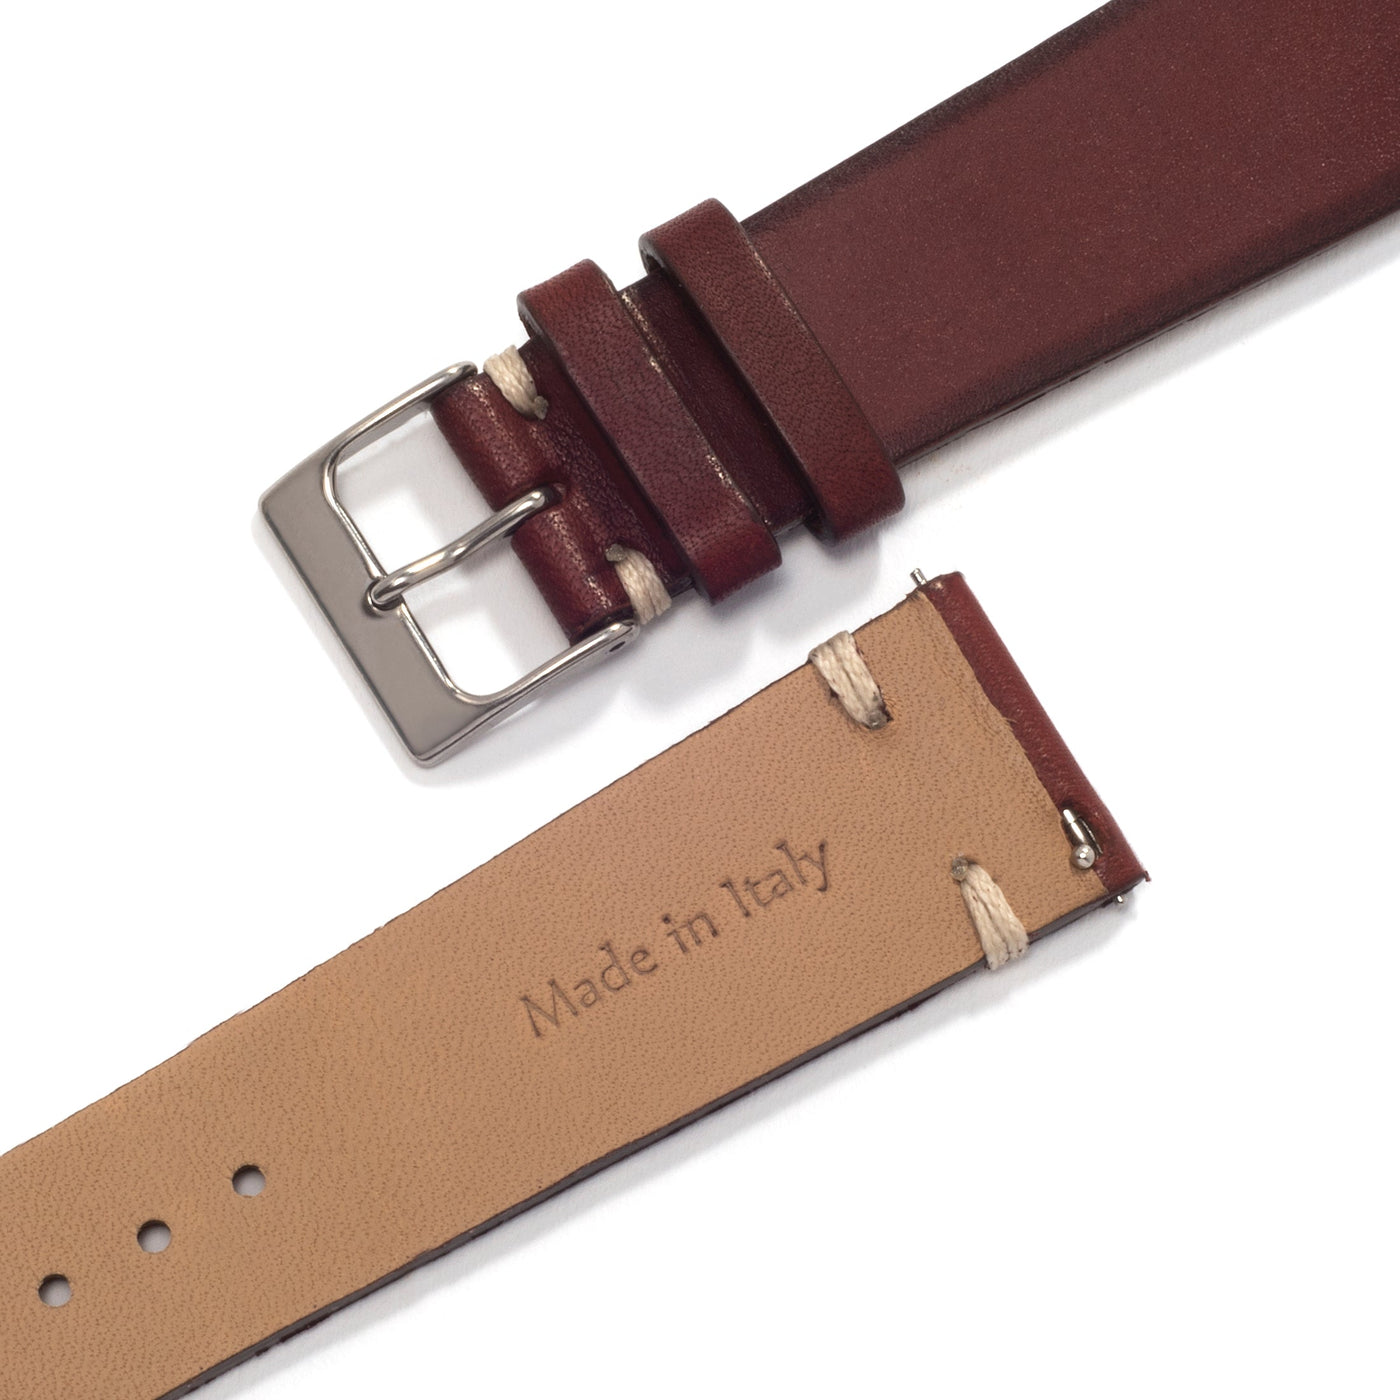 Cherry Leather Universal Watch Strap